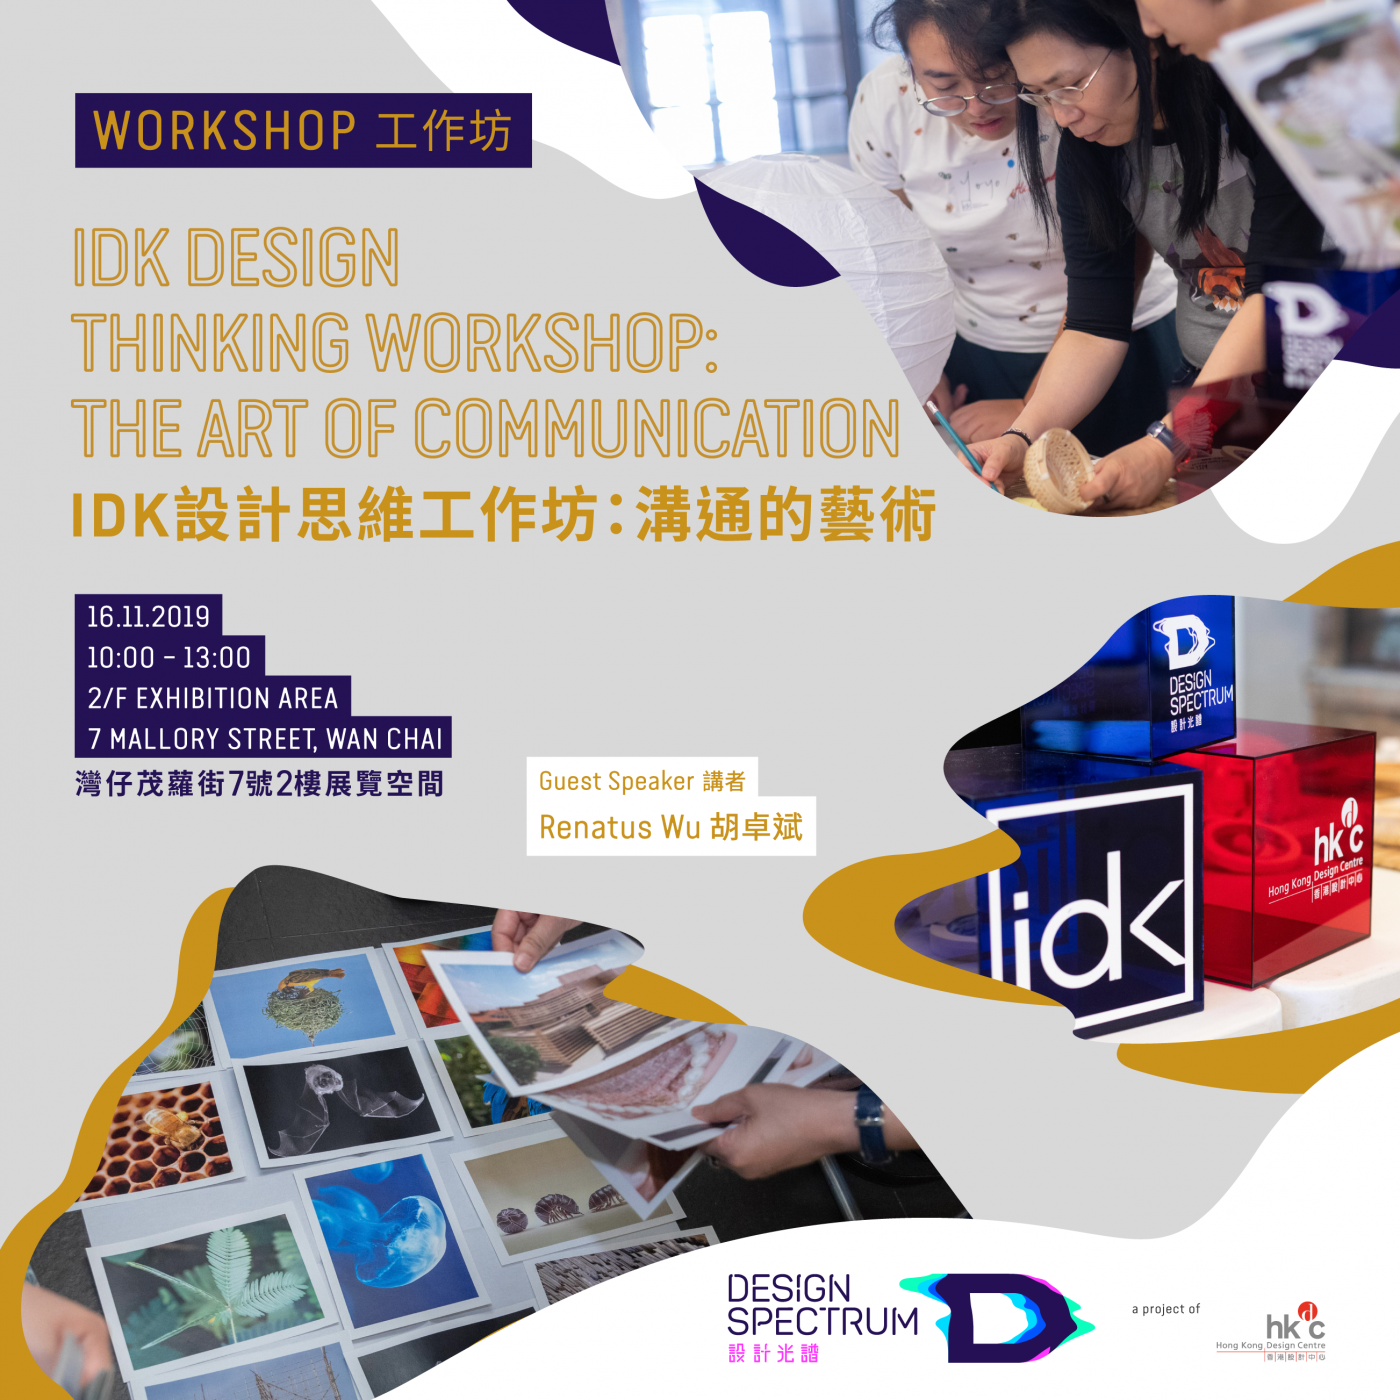 Design Spectrumidk-design-thinking-workshop-the-art-of-communication